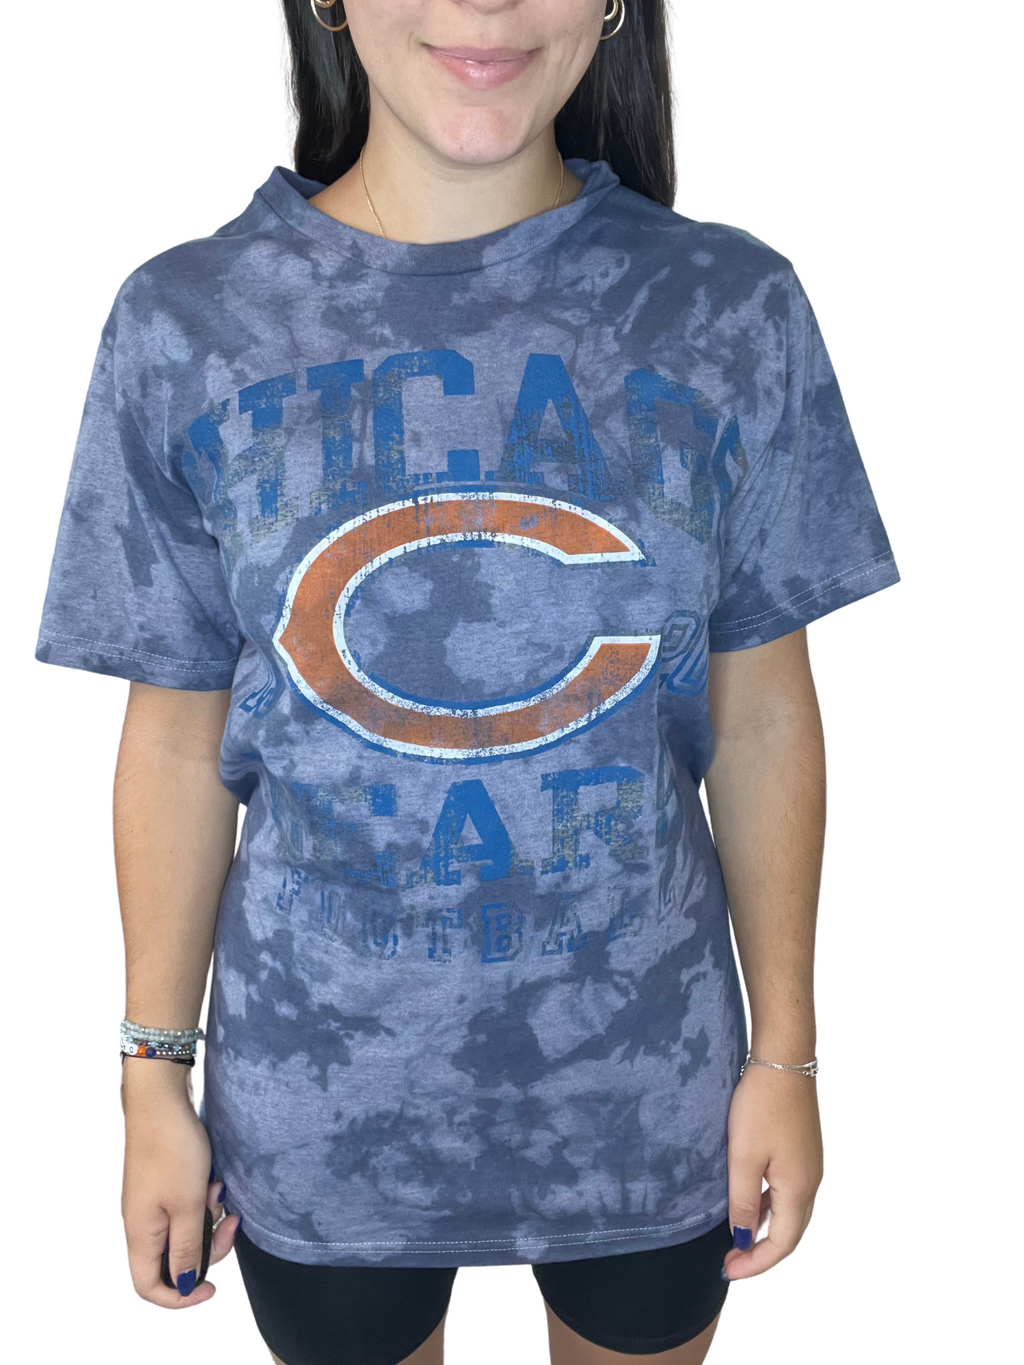 Chicago Bears Tie Dye Shirt